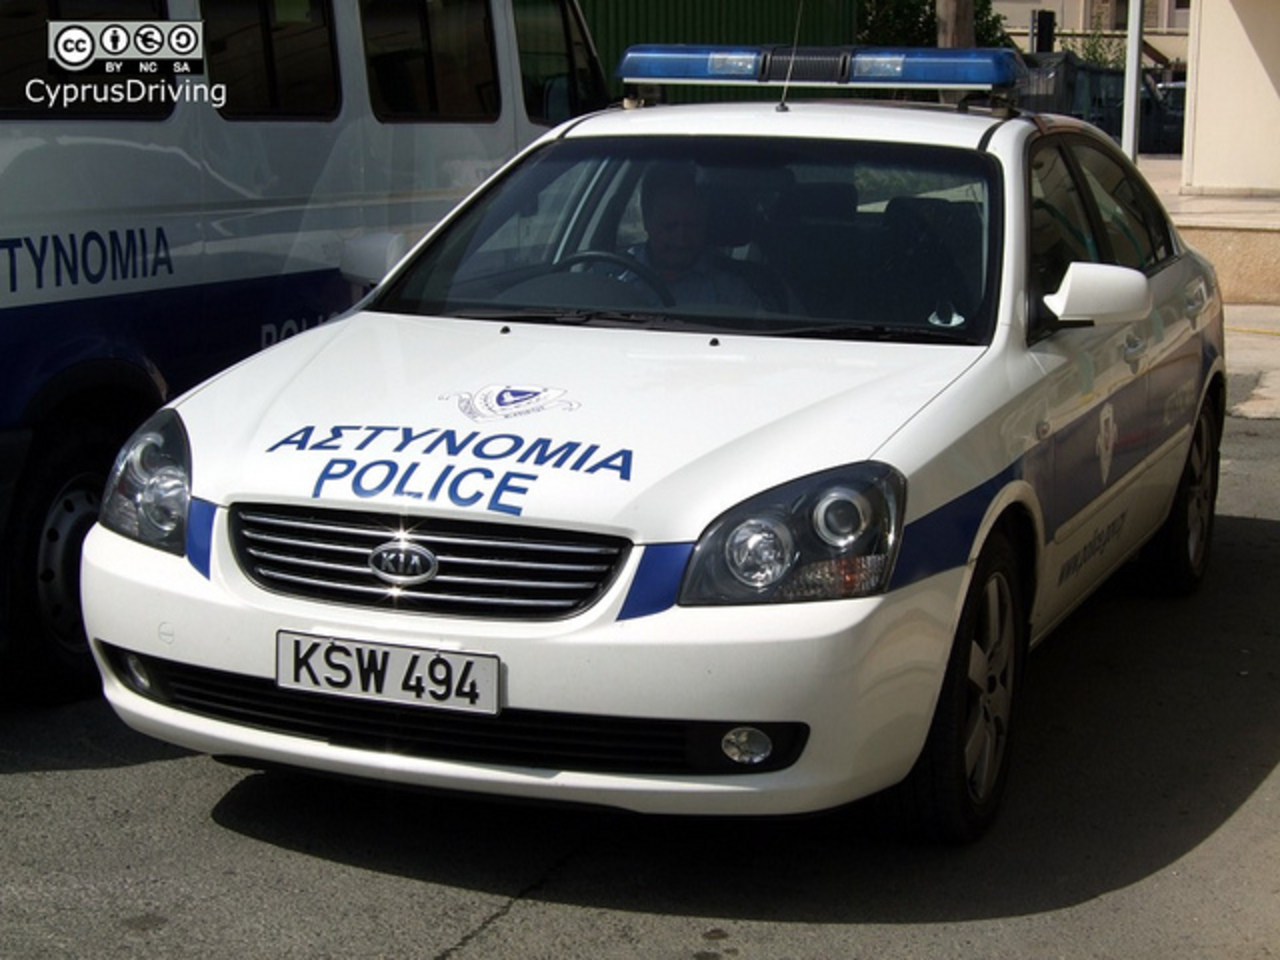 Cyprus Police Kia Magentis 2.7 Traffic Car | Flickr - Photo Sharing!